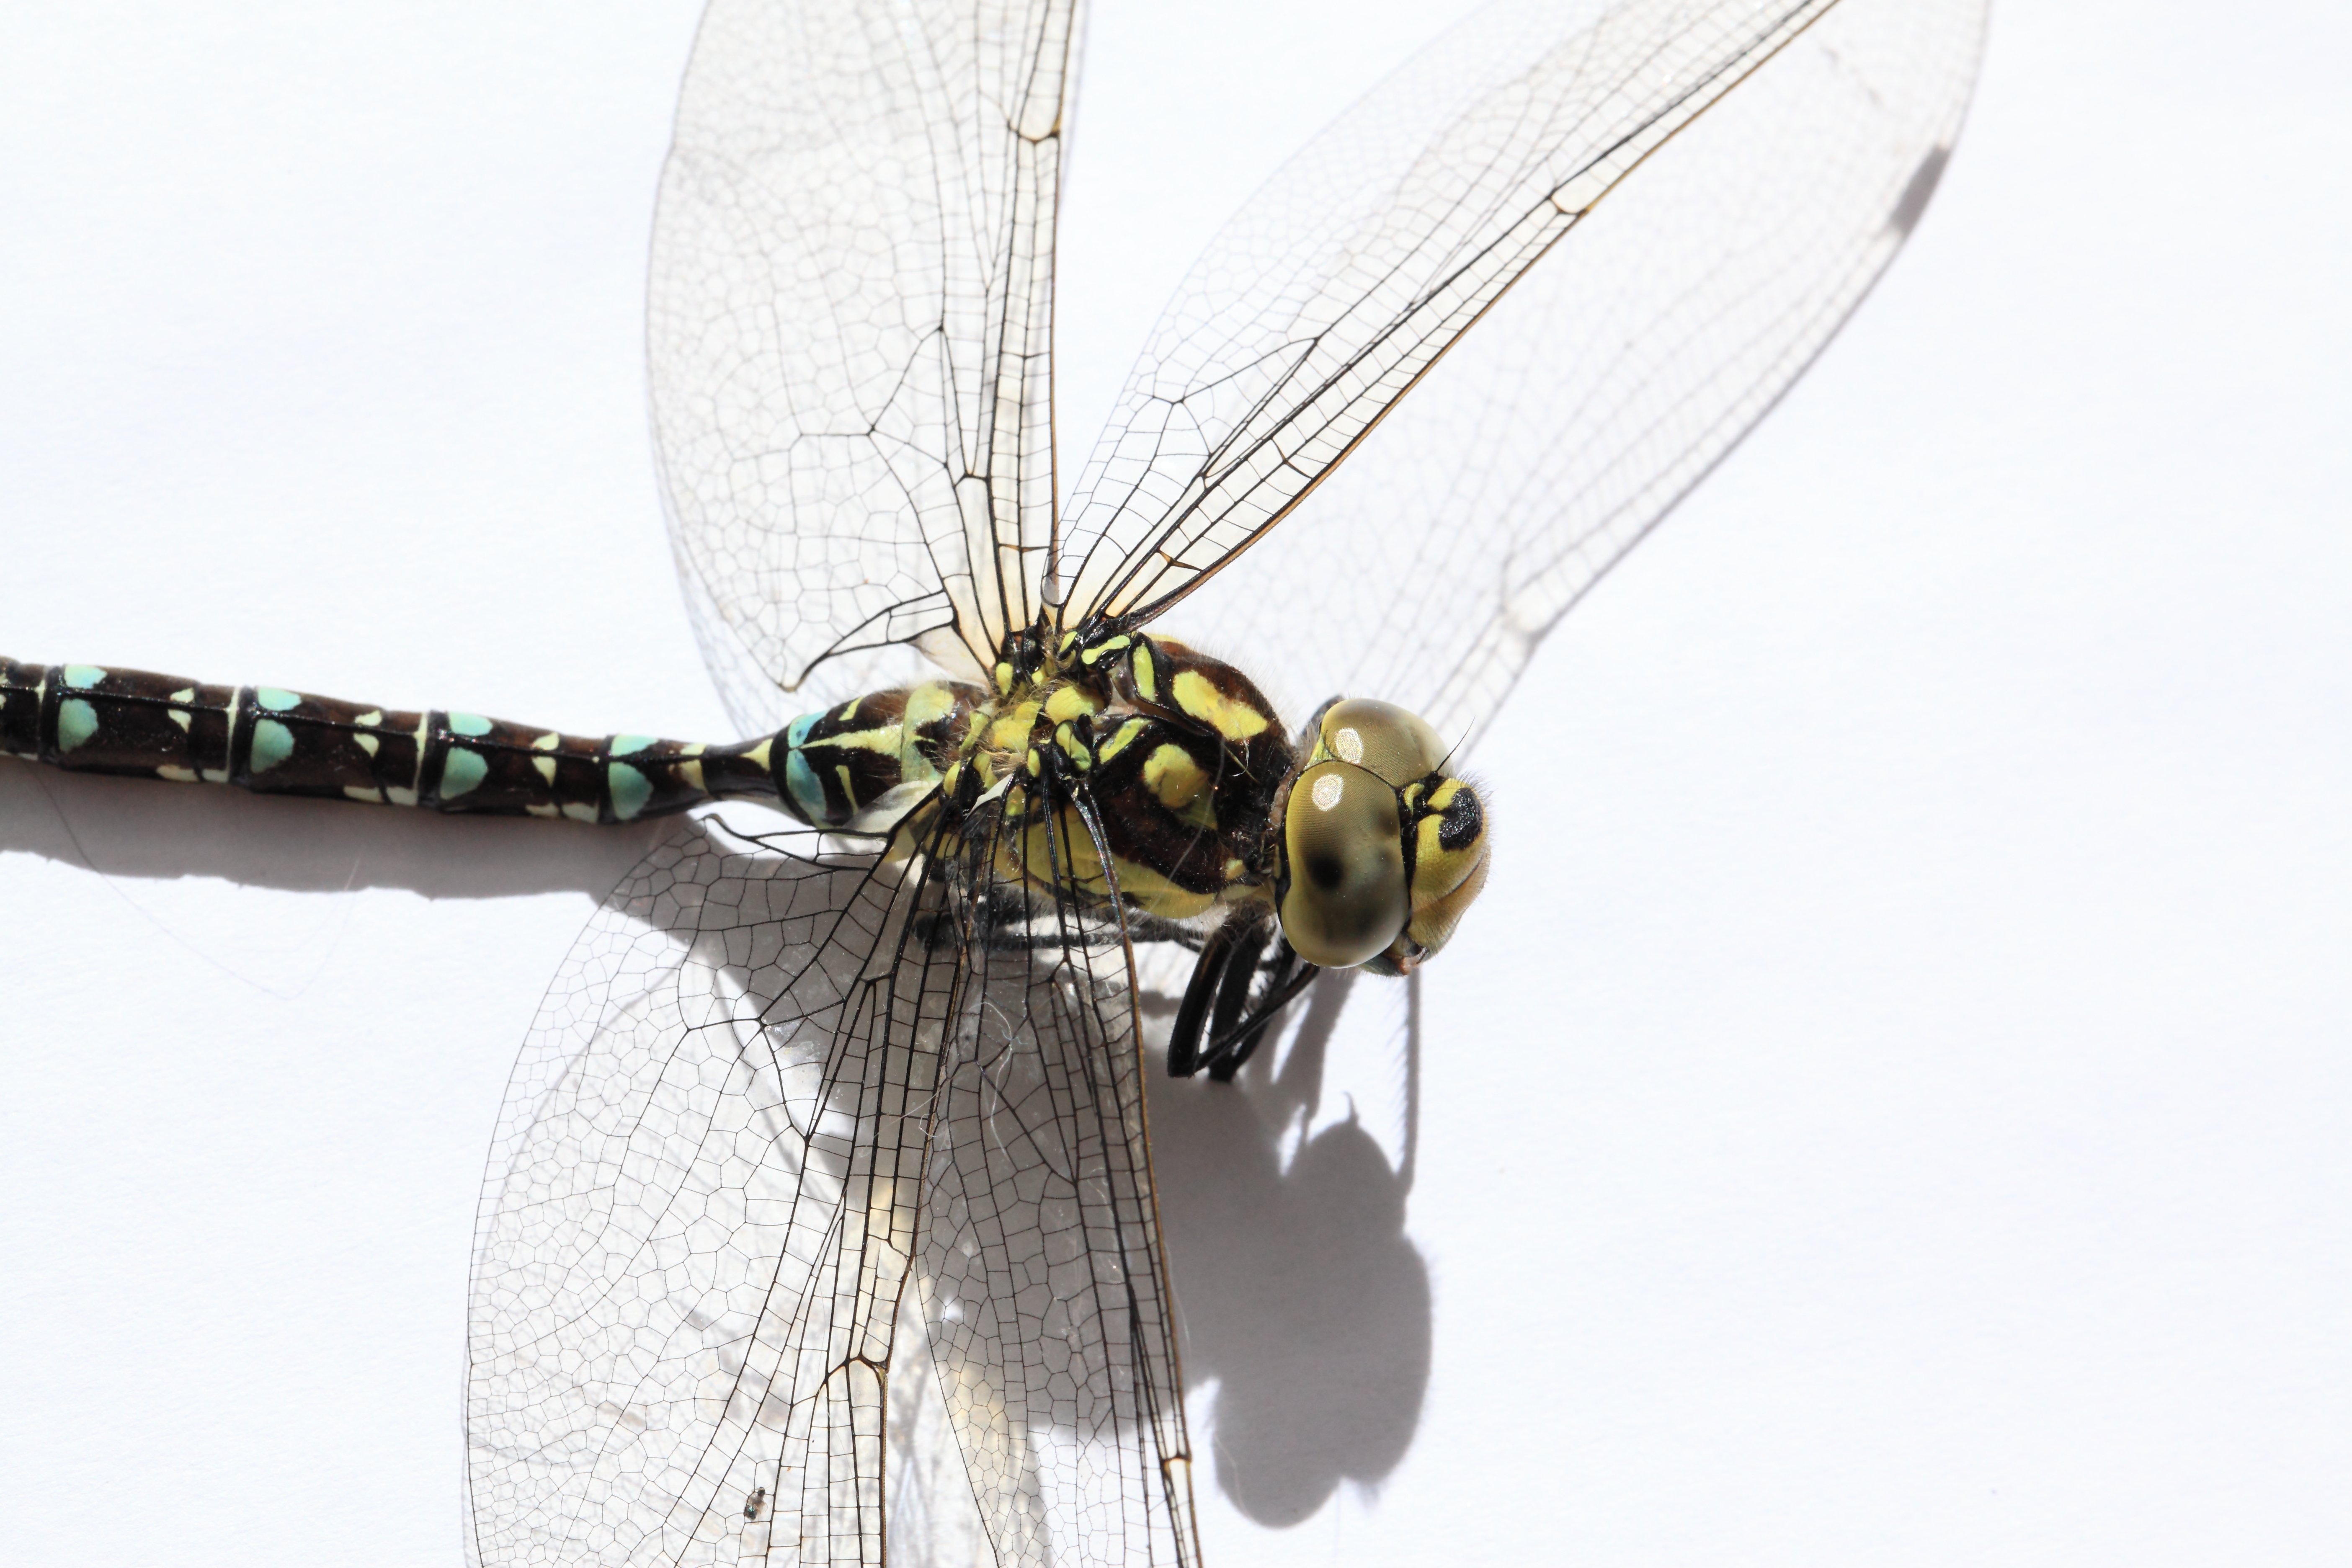 Dragonfly Copyright Chris Bushe 2015